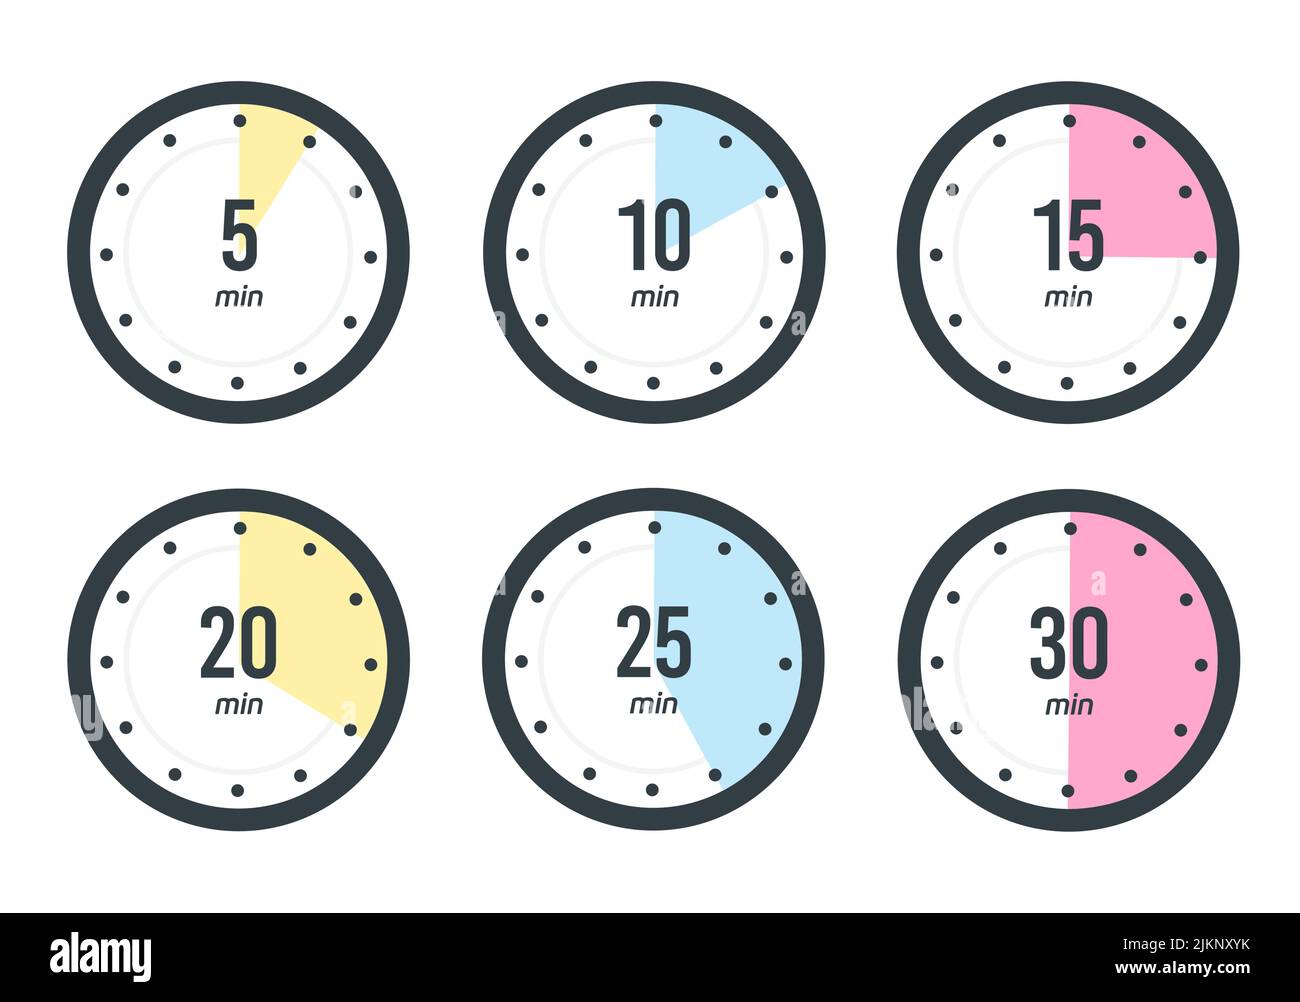 https://c8.alamy.com/comp/2JKNXYK/timer-clock-stopwatch-isolated-set-icons-5-10-15-20-25-30-min-label-cooking-time-vector-illustration-2JKNXYK.jpg